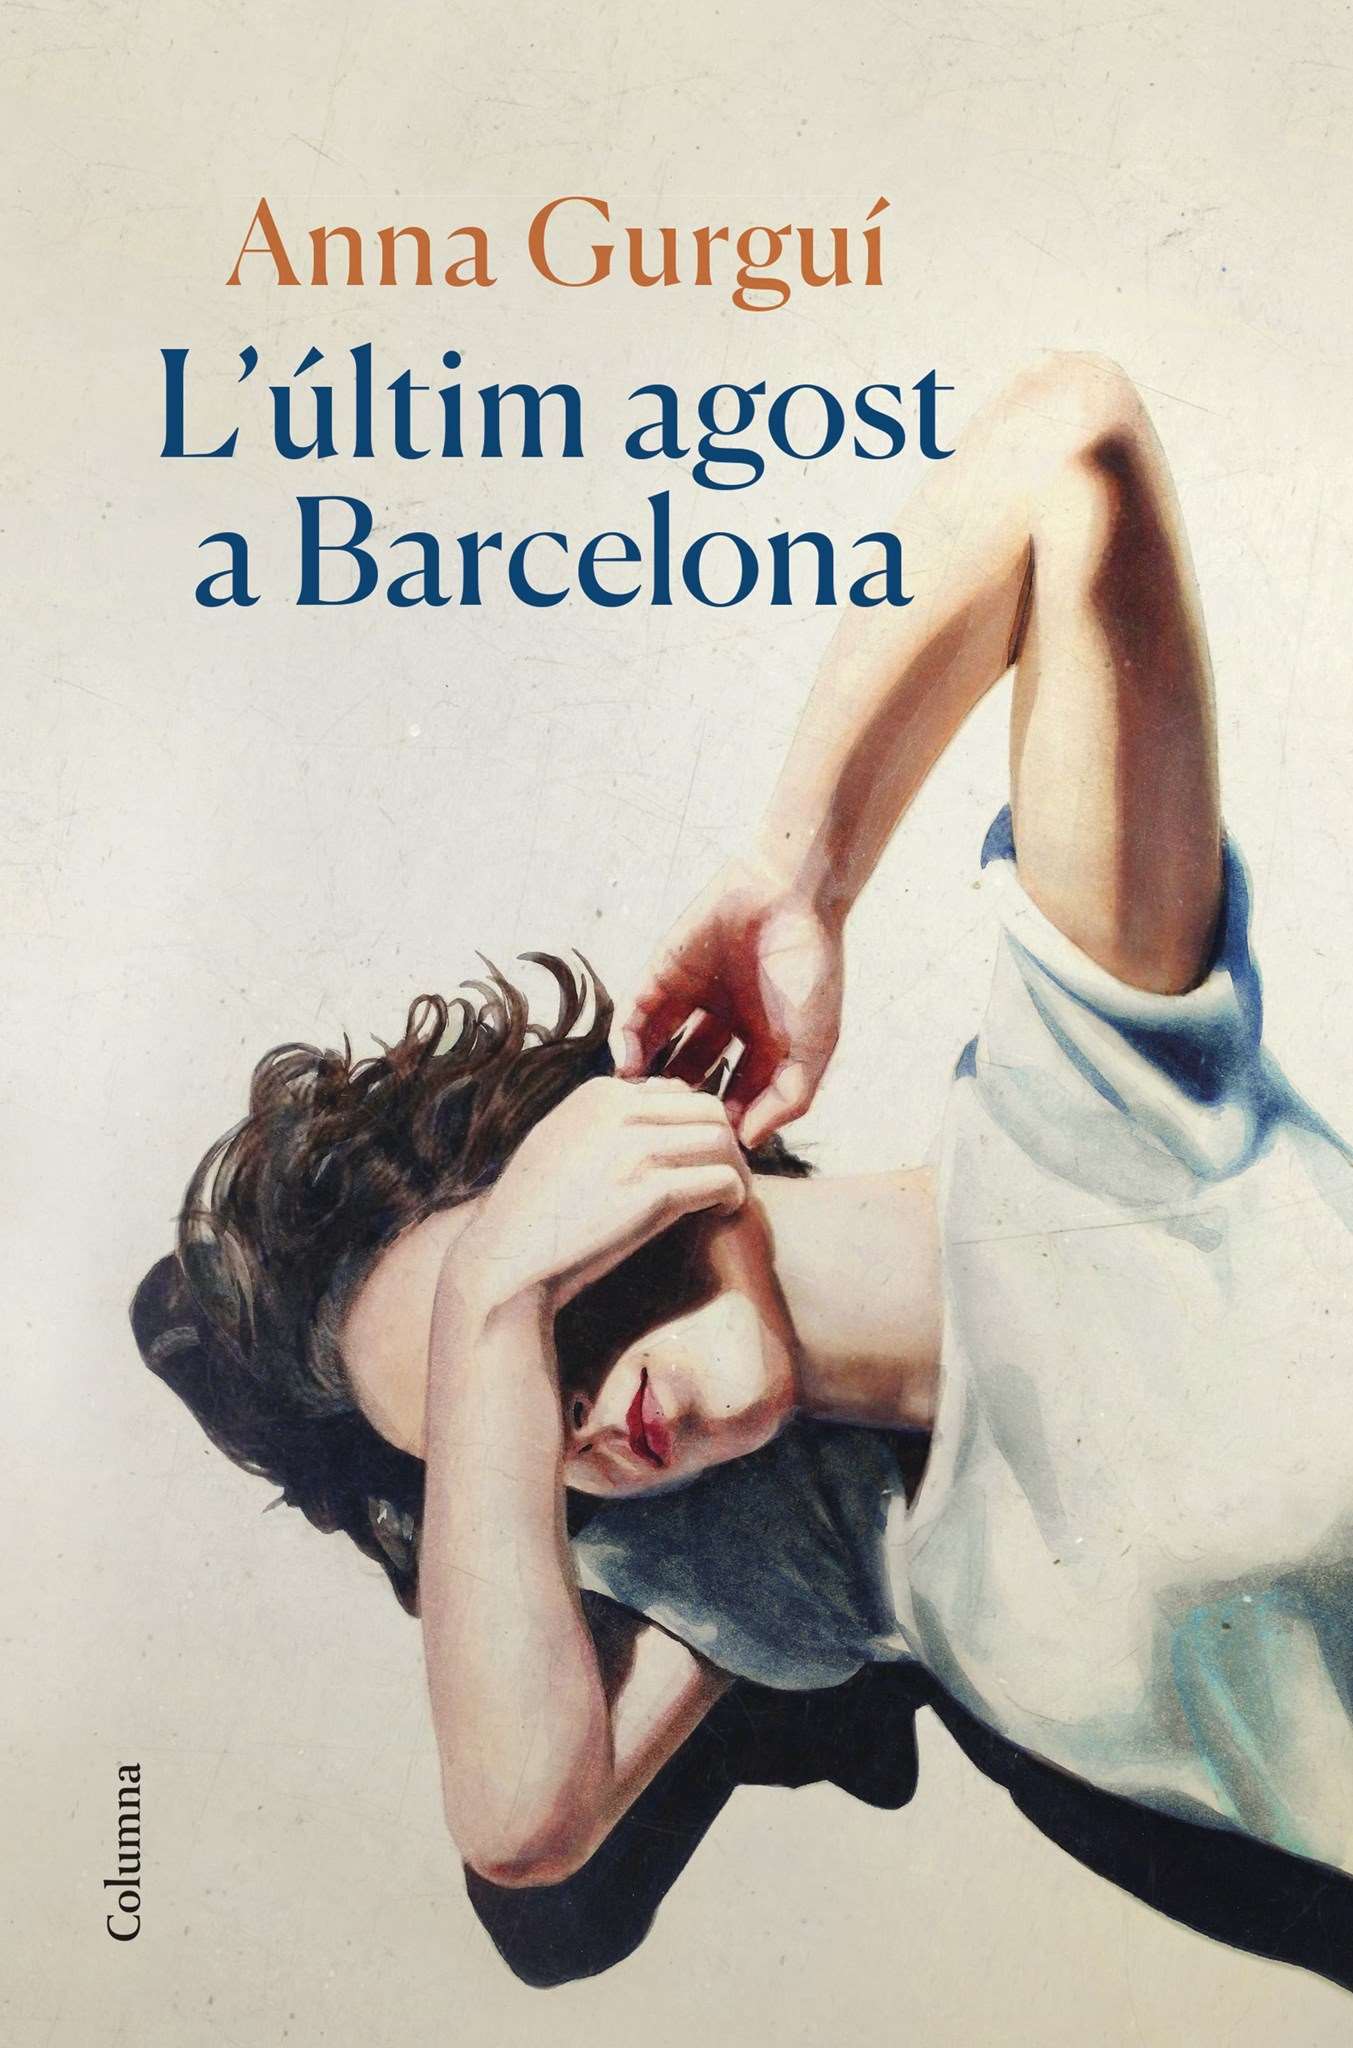 L'últim agost a Barcelona, d’Anna Gurguí